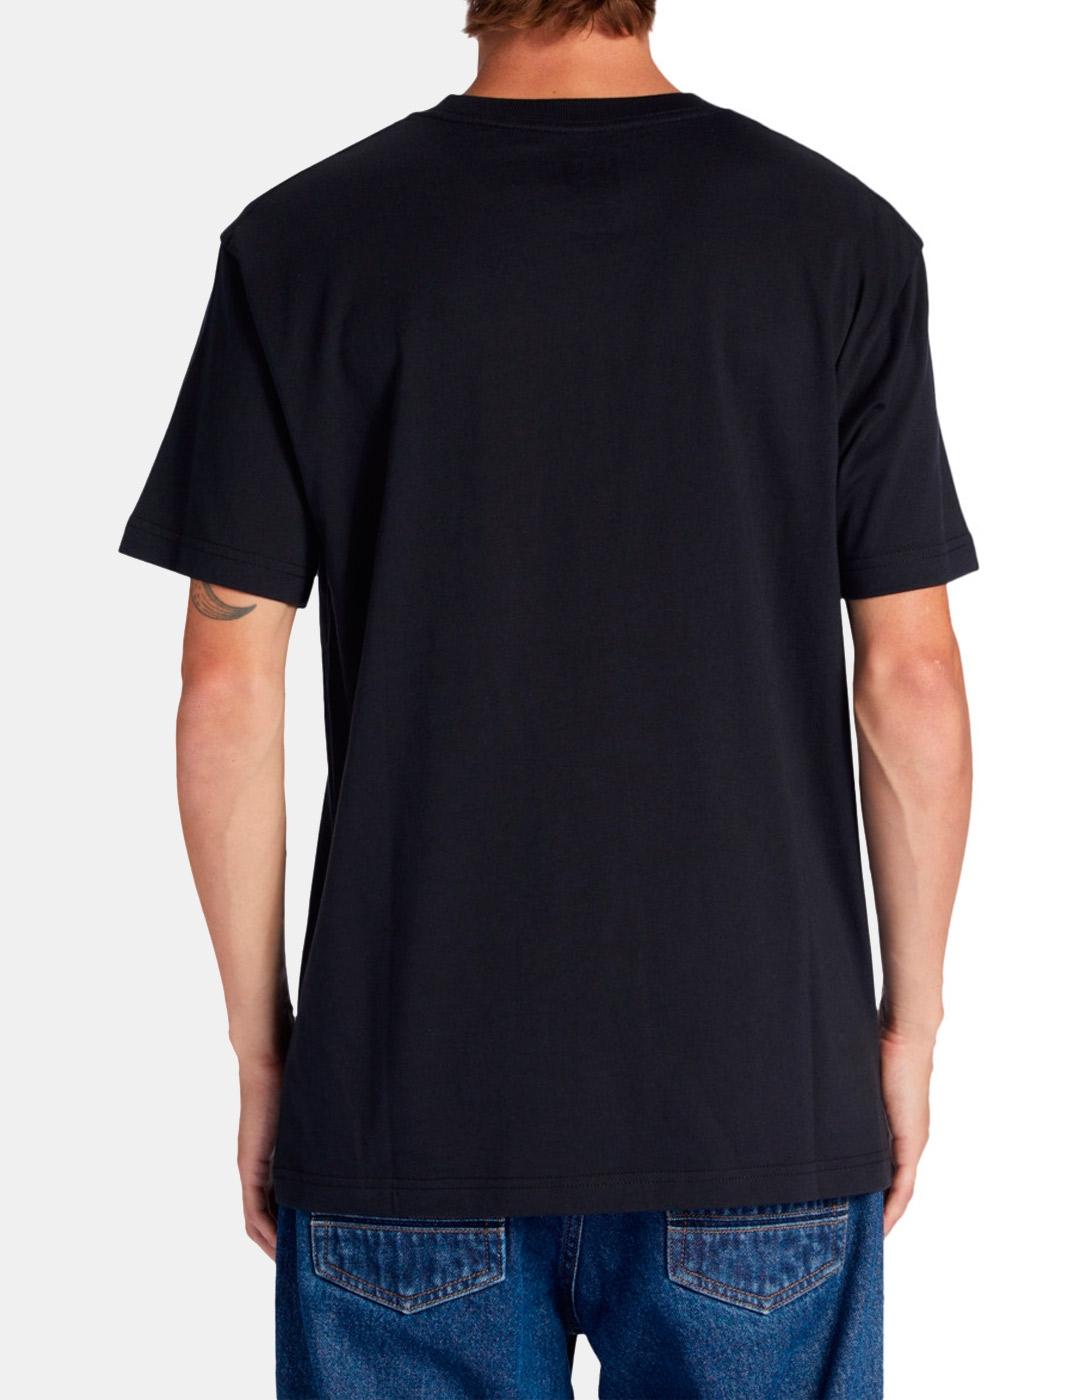 Camiseta DC SHOES SQUARE STAR FILL - Black/Greystone